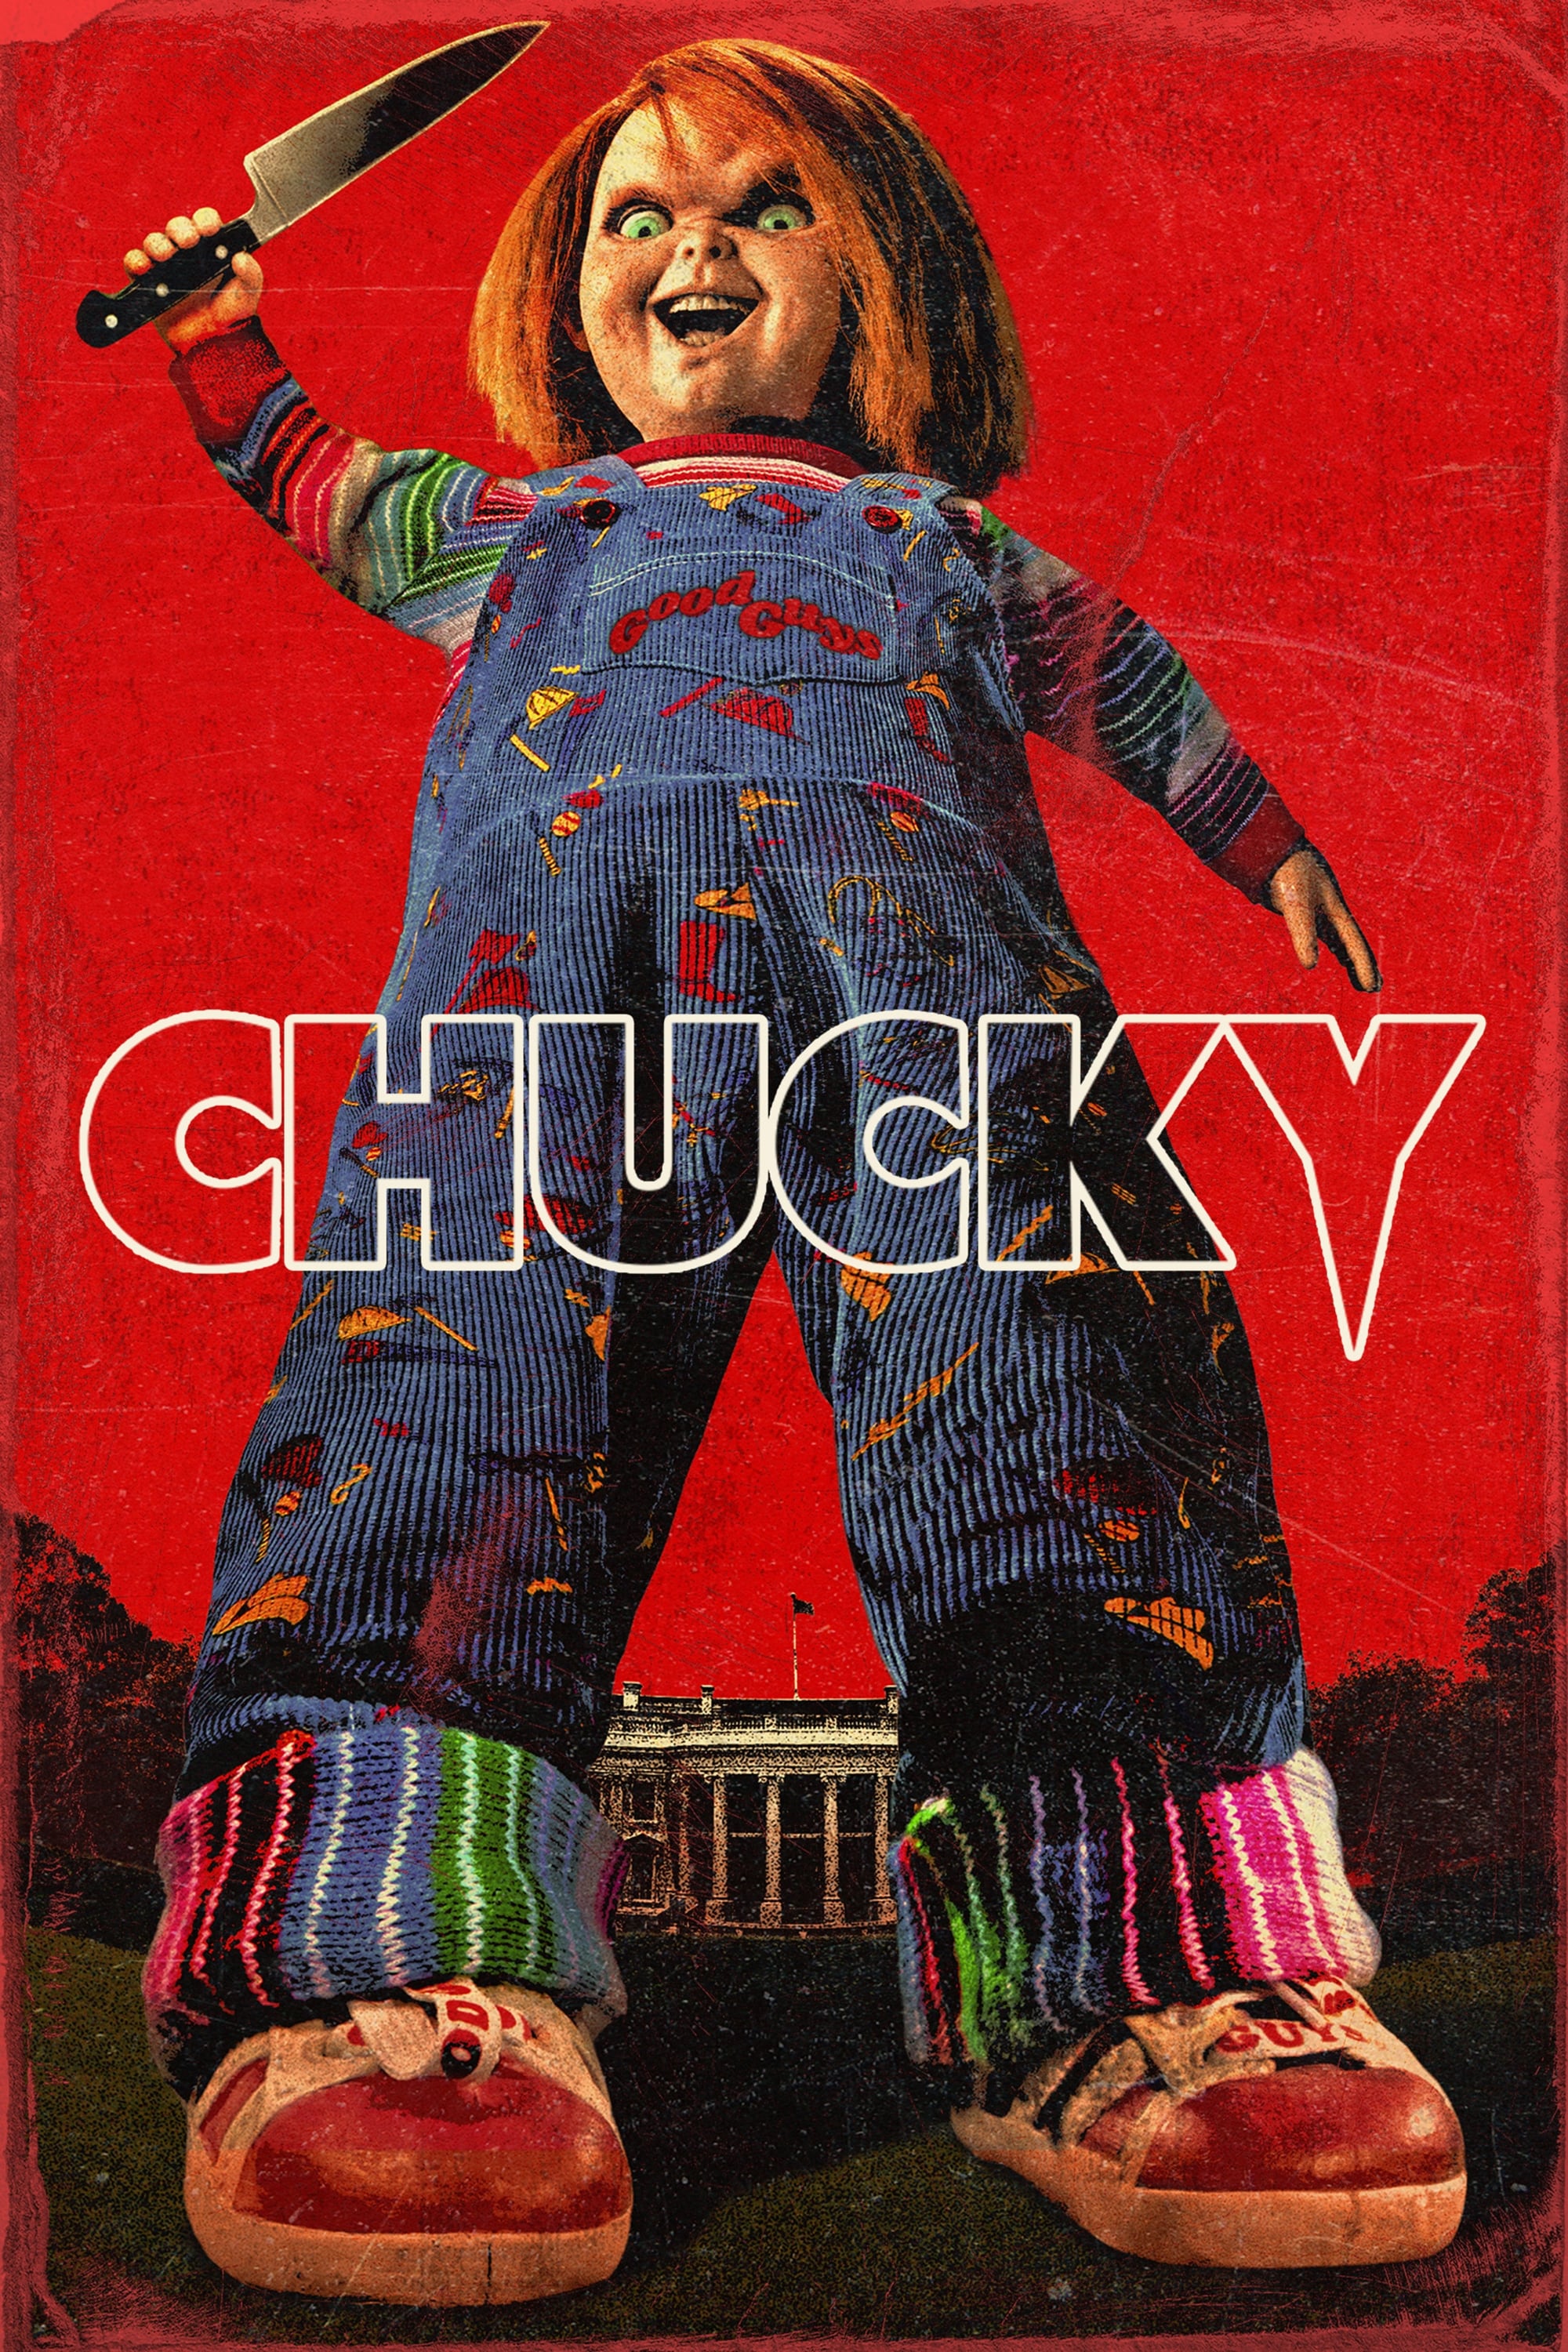 Chucky TV Shows About Serial Killer